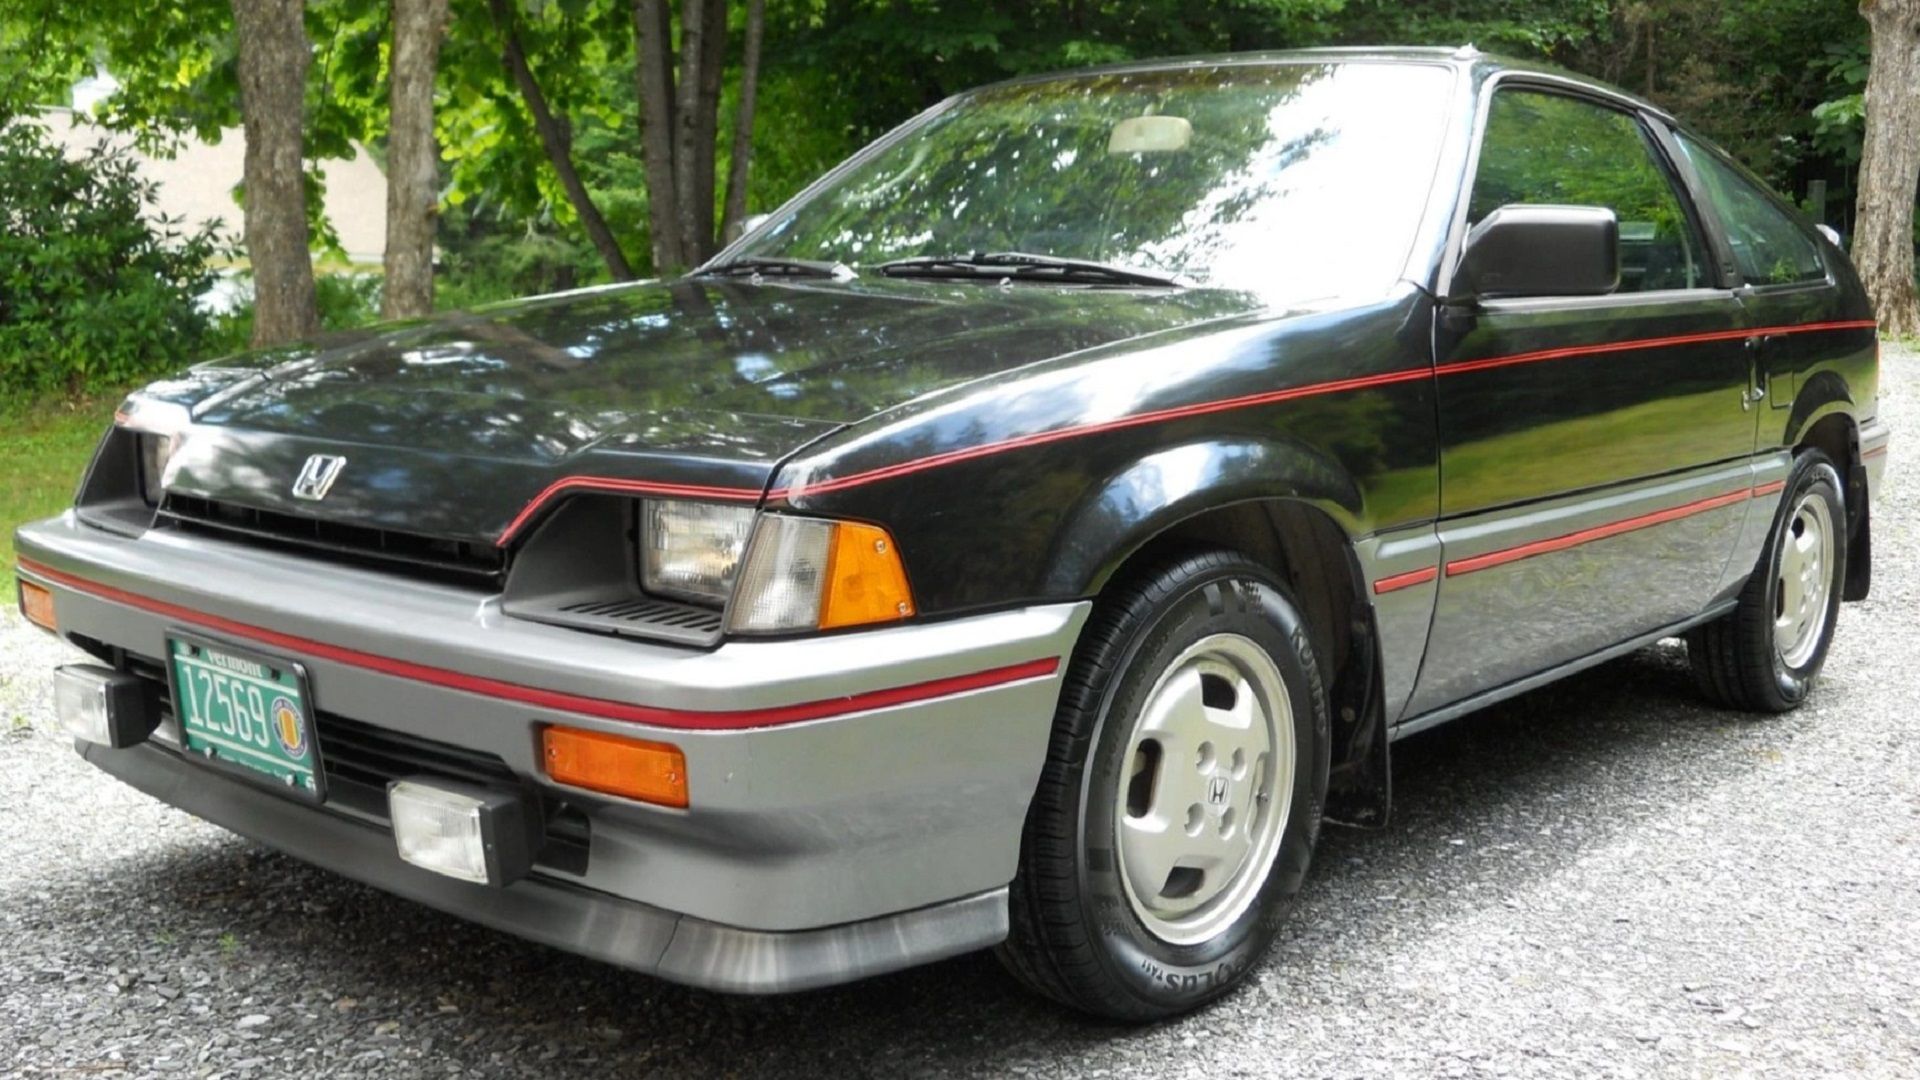 A parked 1985 Honda CRXsi